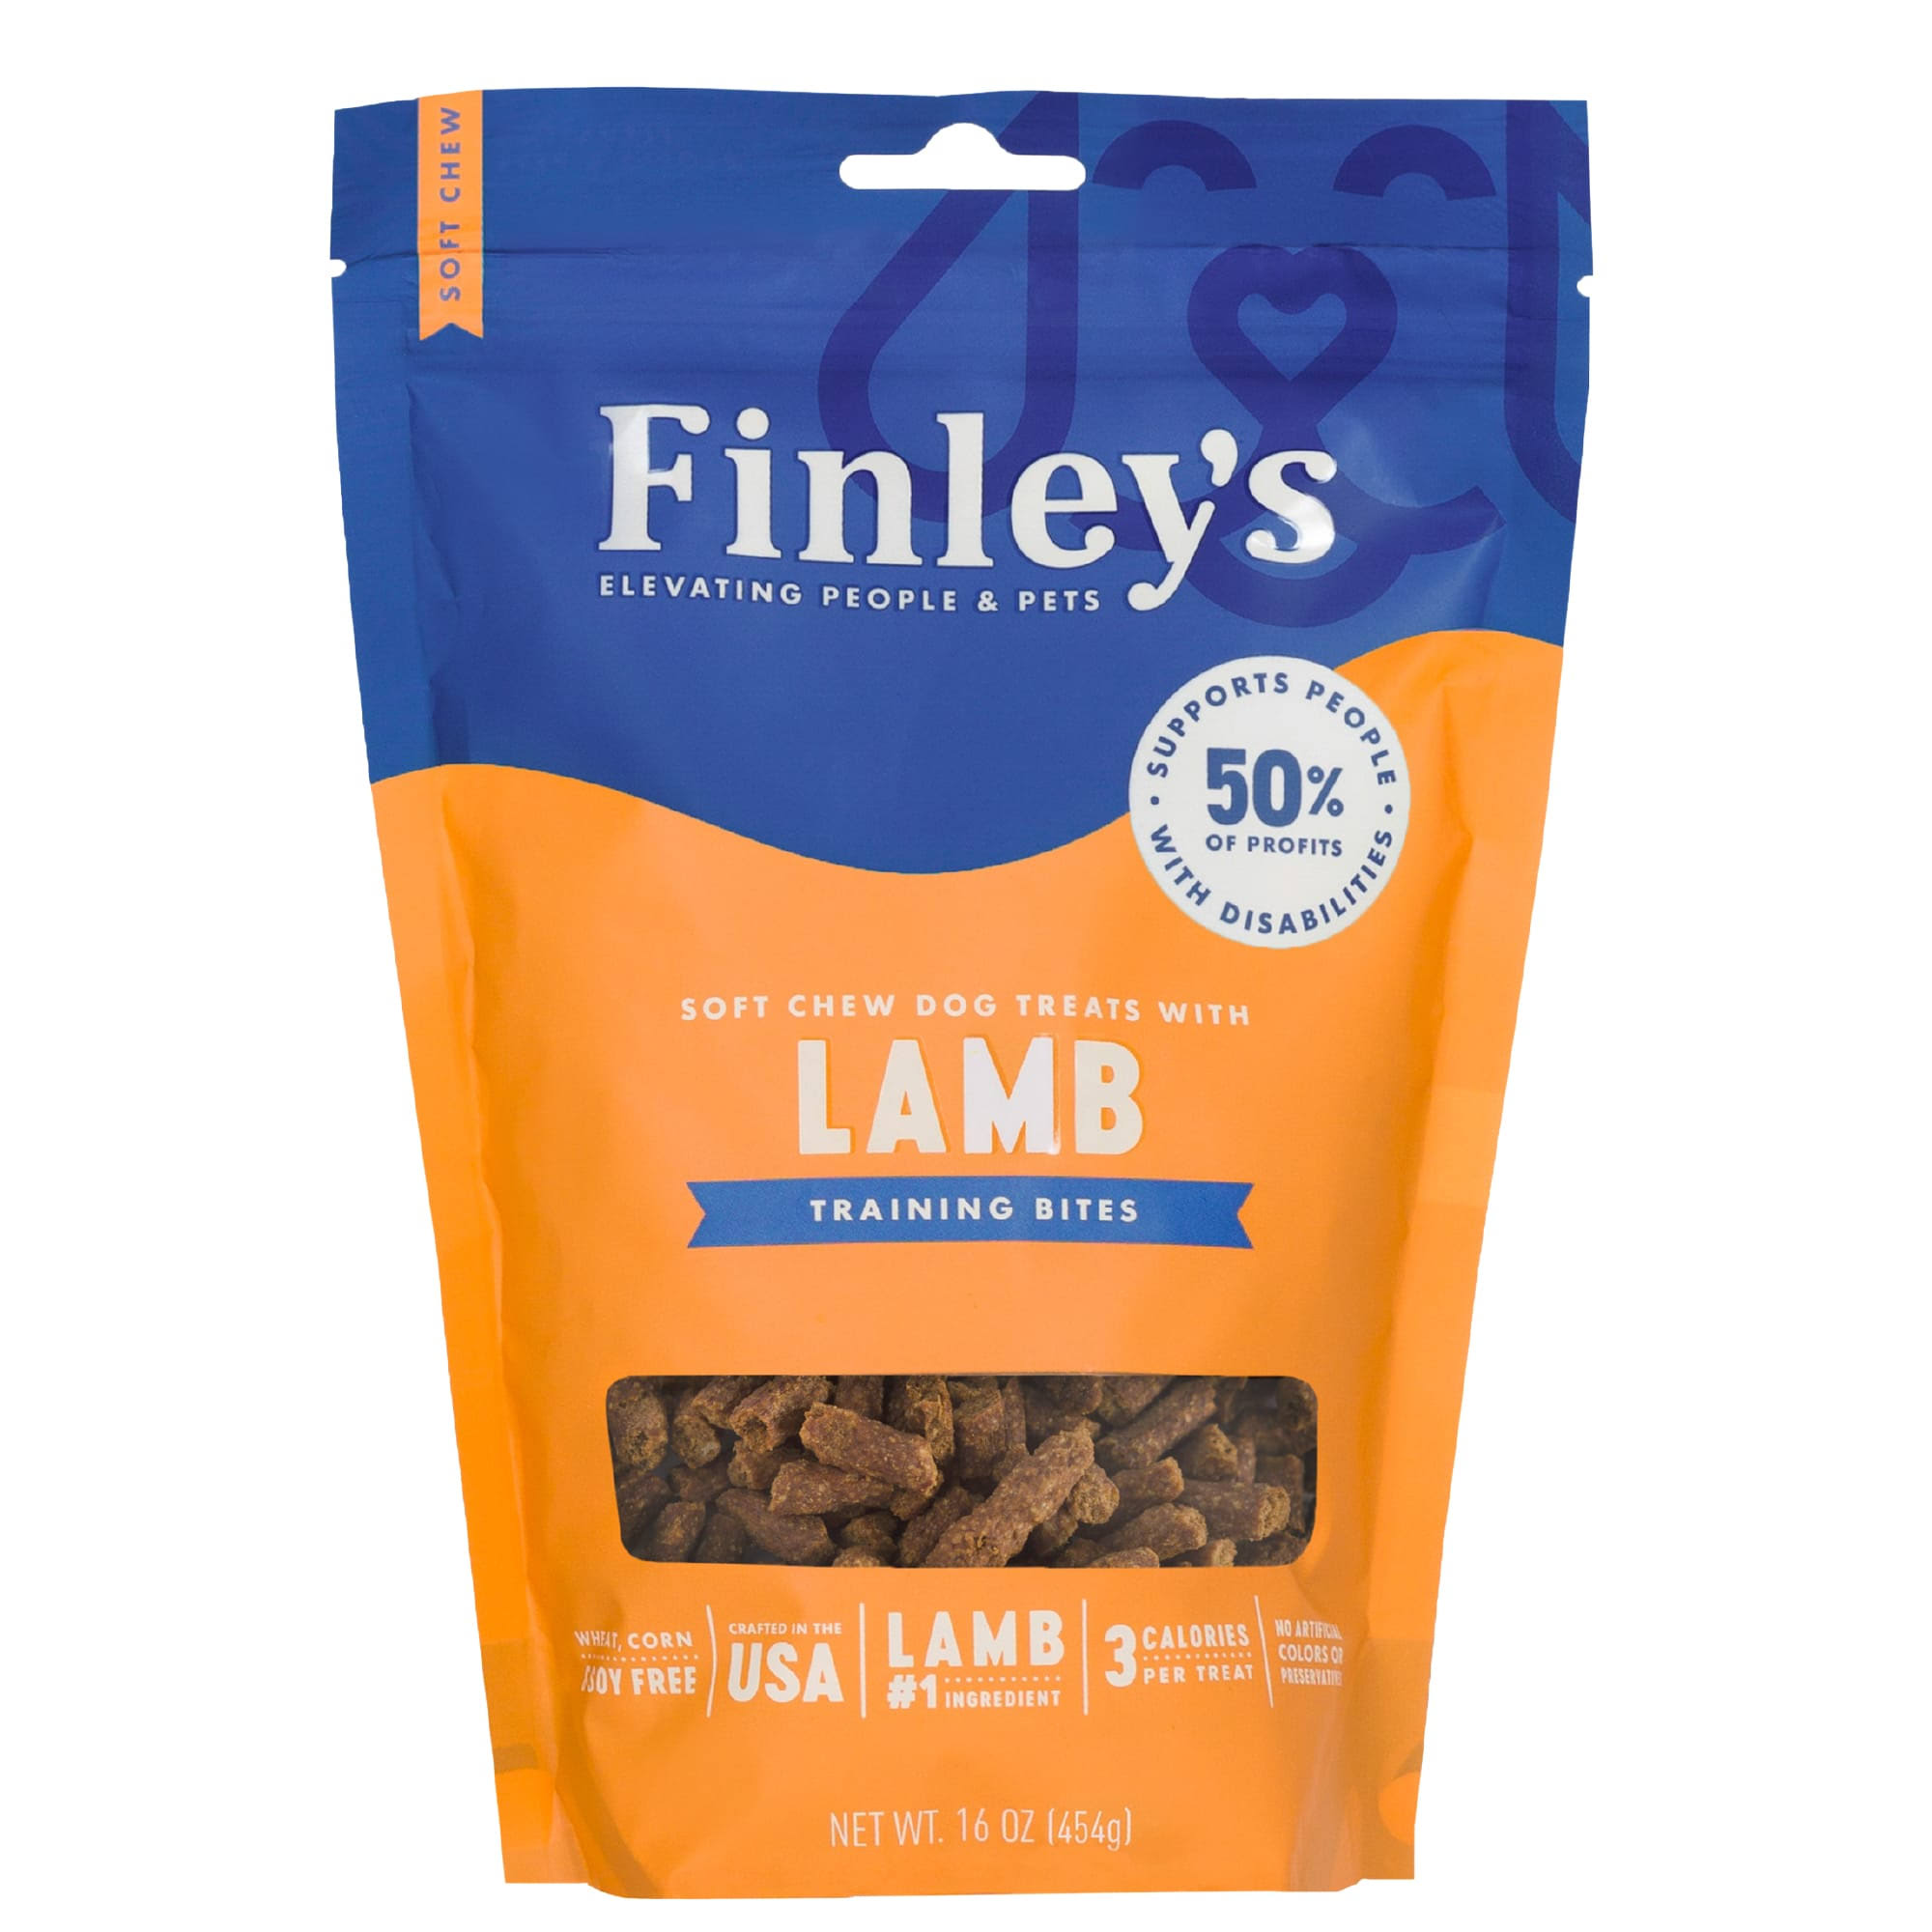 Finley's Lamb Soft Chew Dog Treats Training Bites - 16 oz